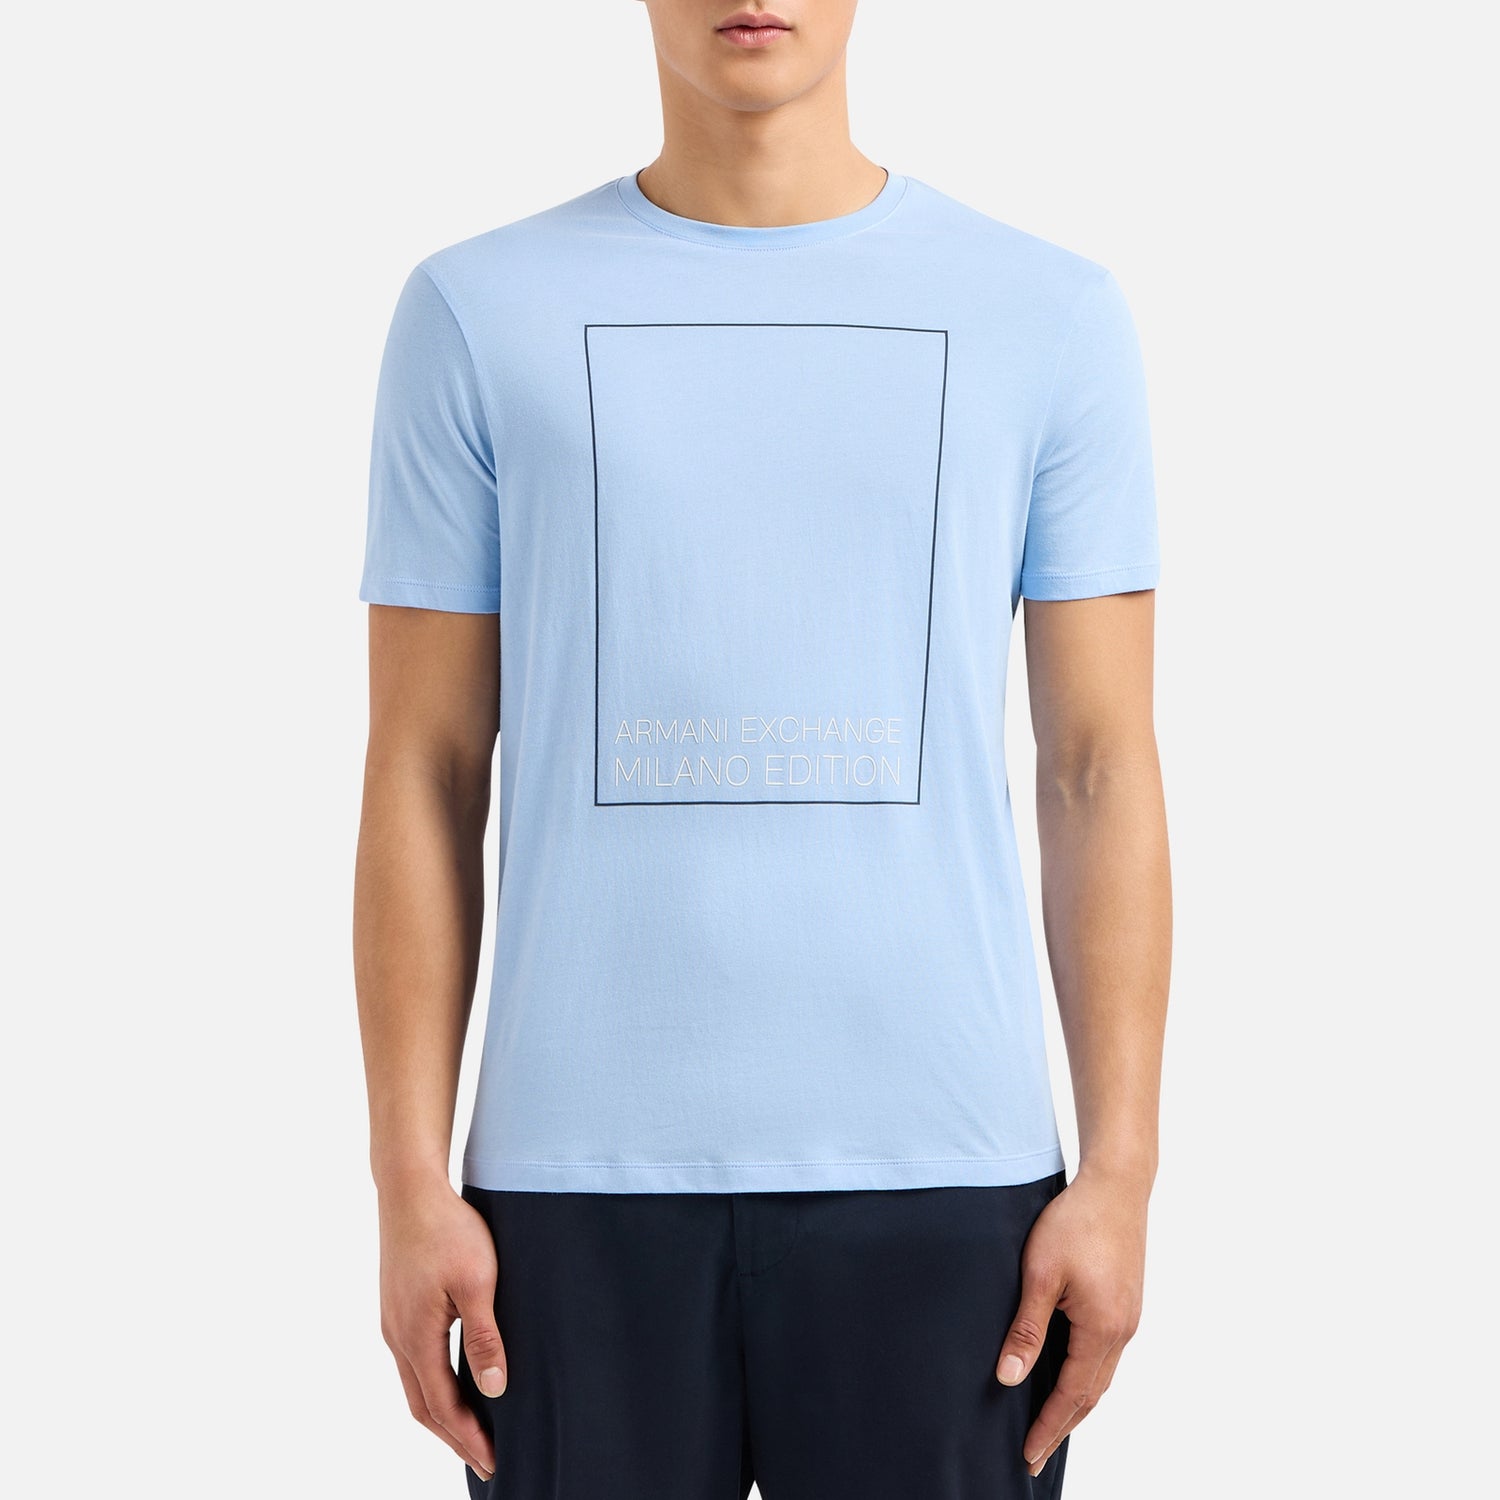 Armani Exchange Men's Milano Edition T-Shirt - Blue - L